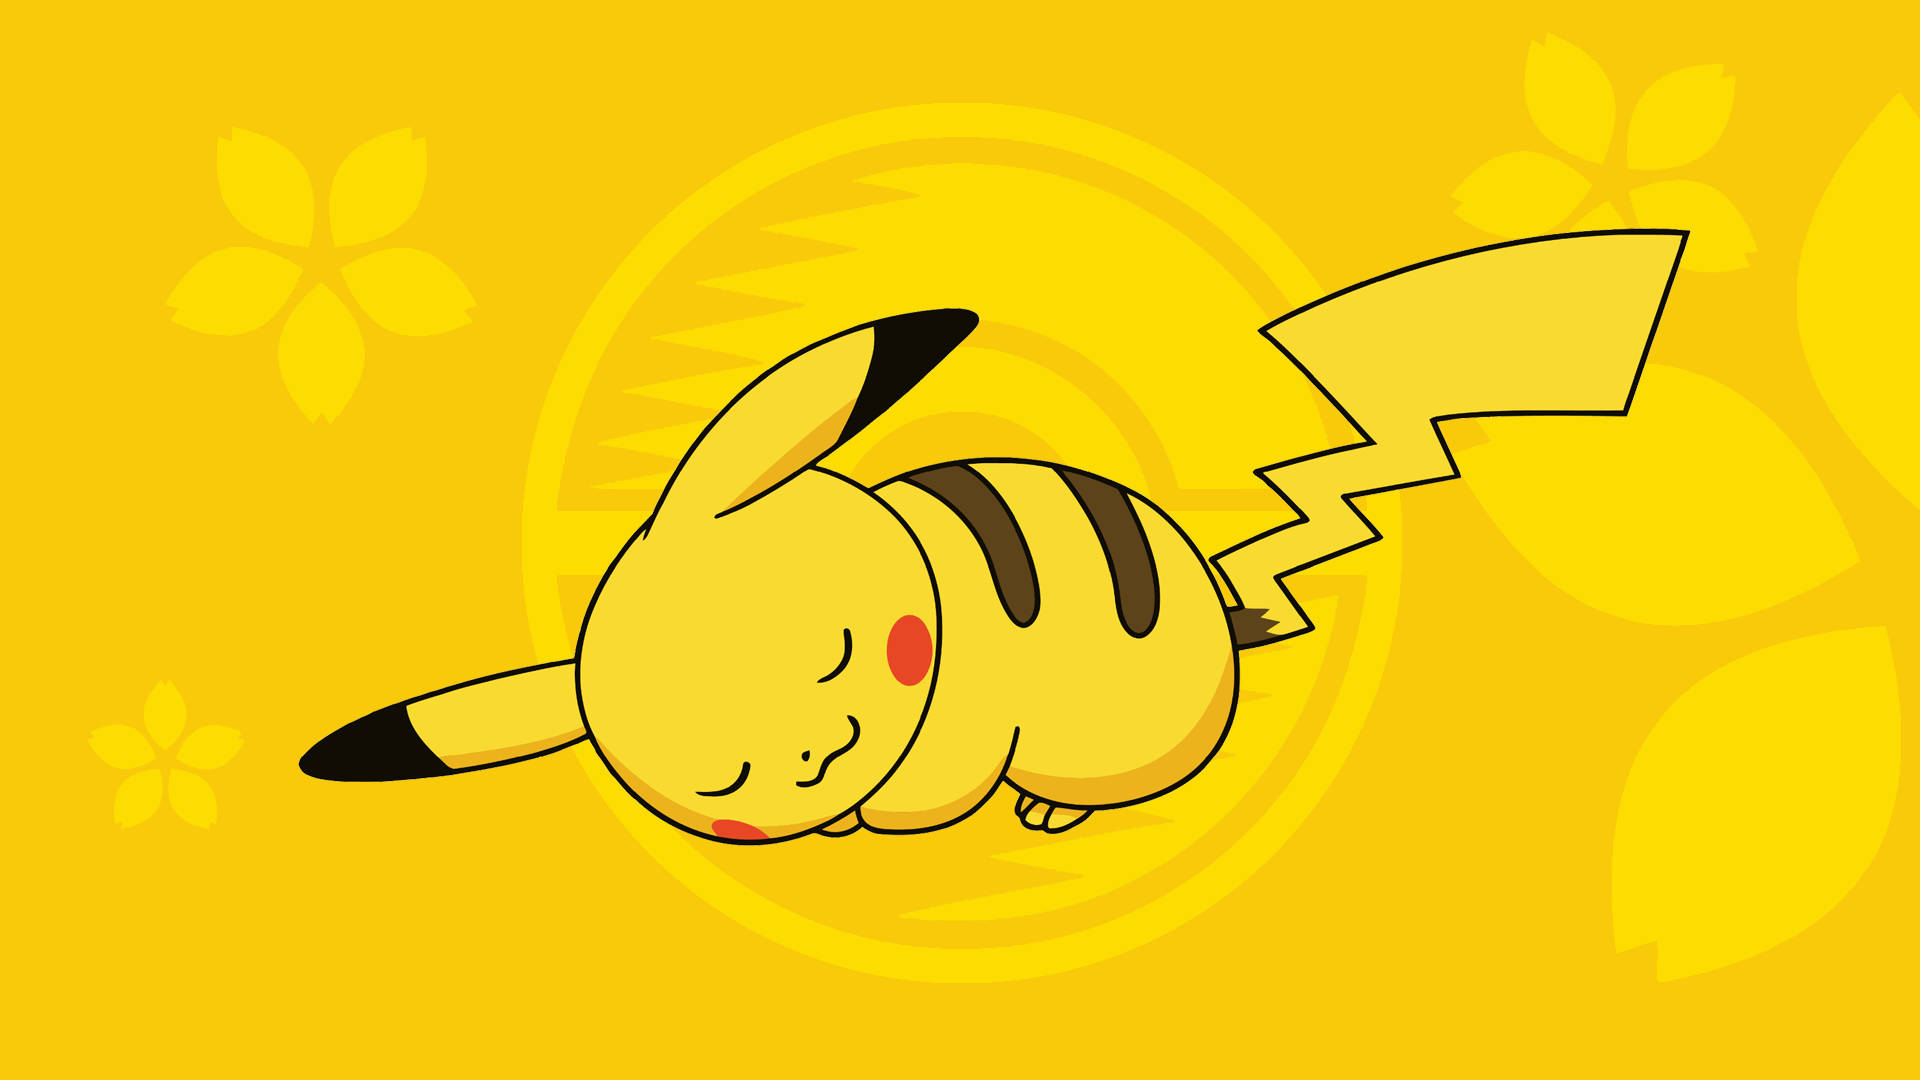 Download Pikachu 3d Peaceful Electric Type Pokémon Wallpaper | Wallpapers .com